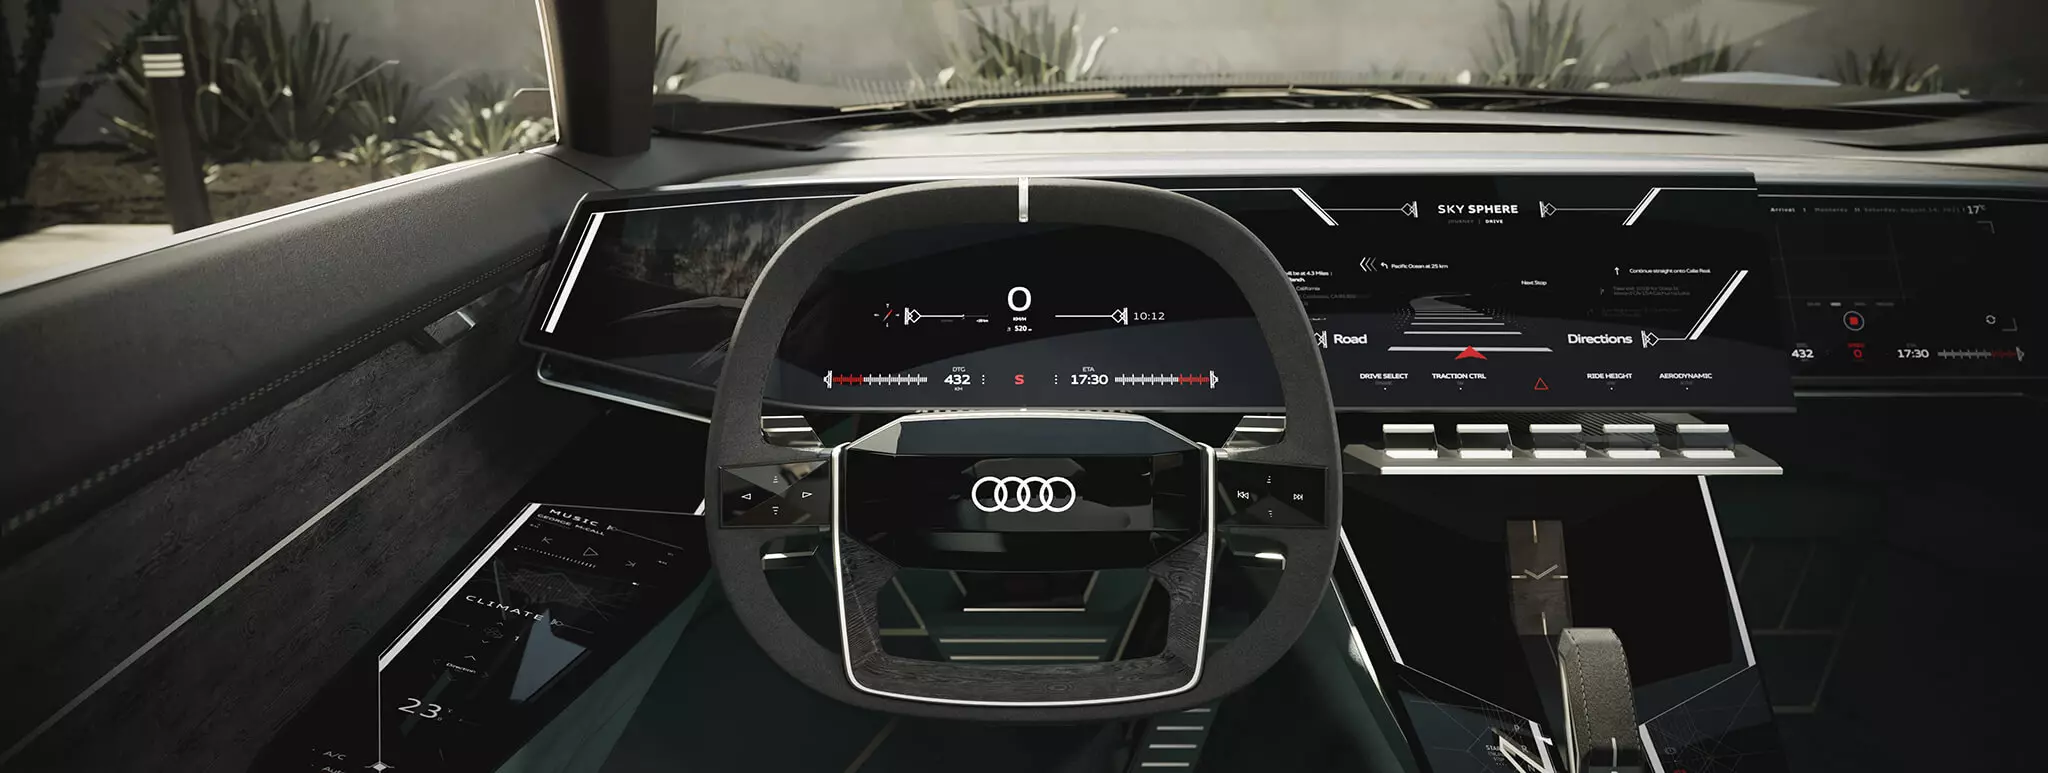 Audi skysphere koncept